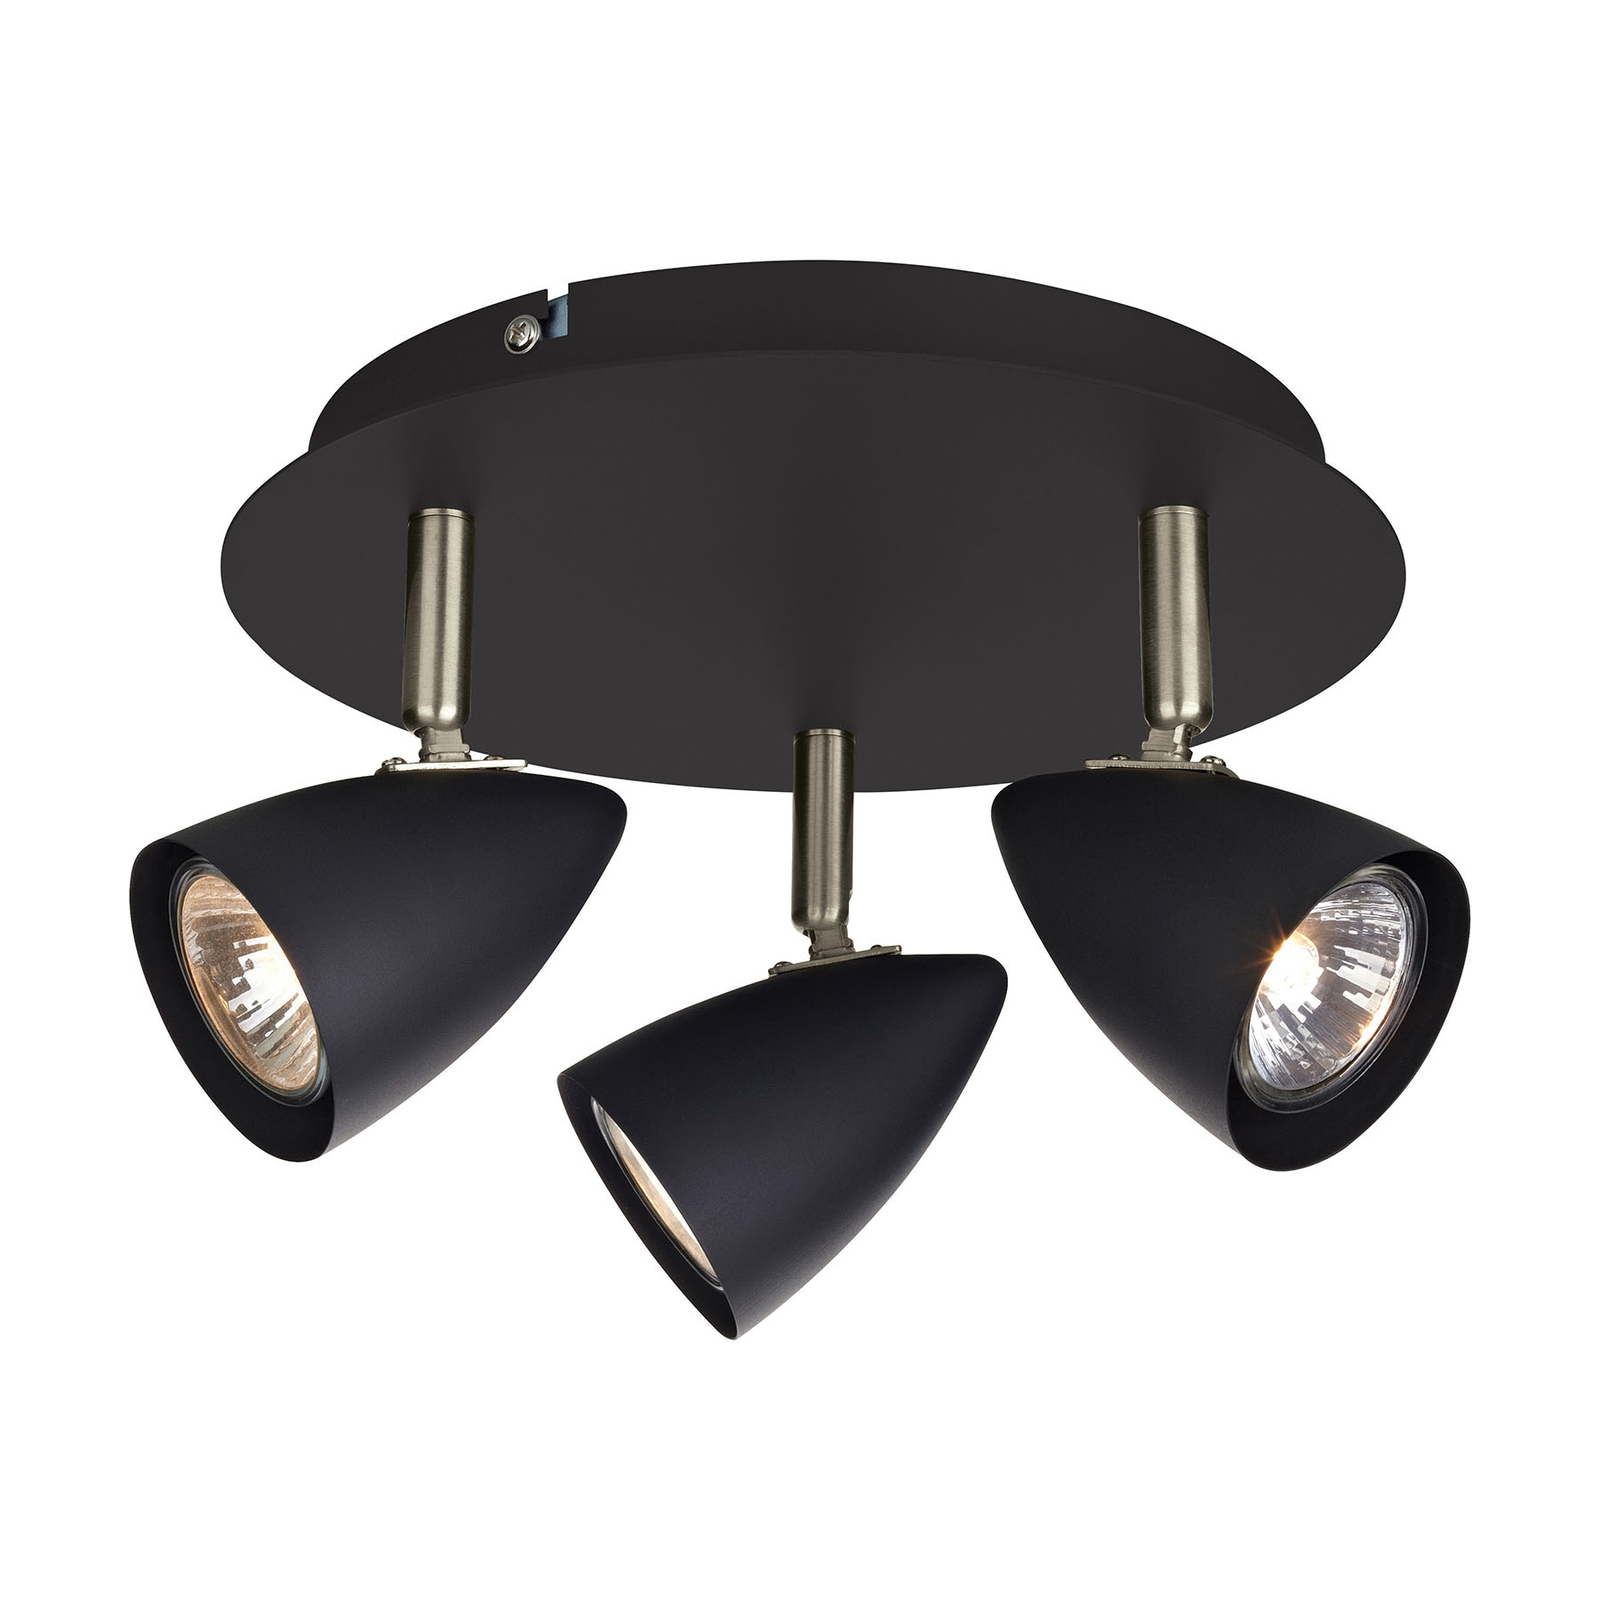 Ciro ceiling lamp adjustable spots, black